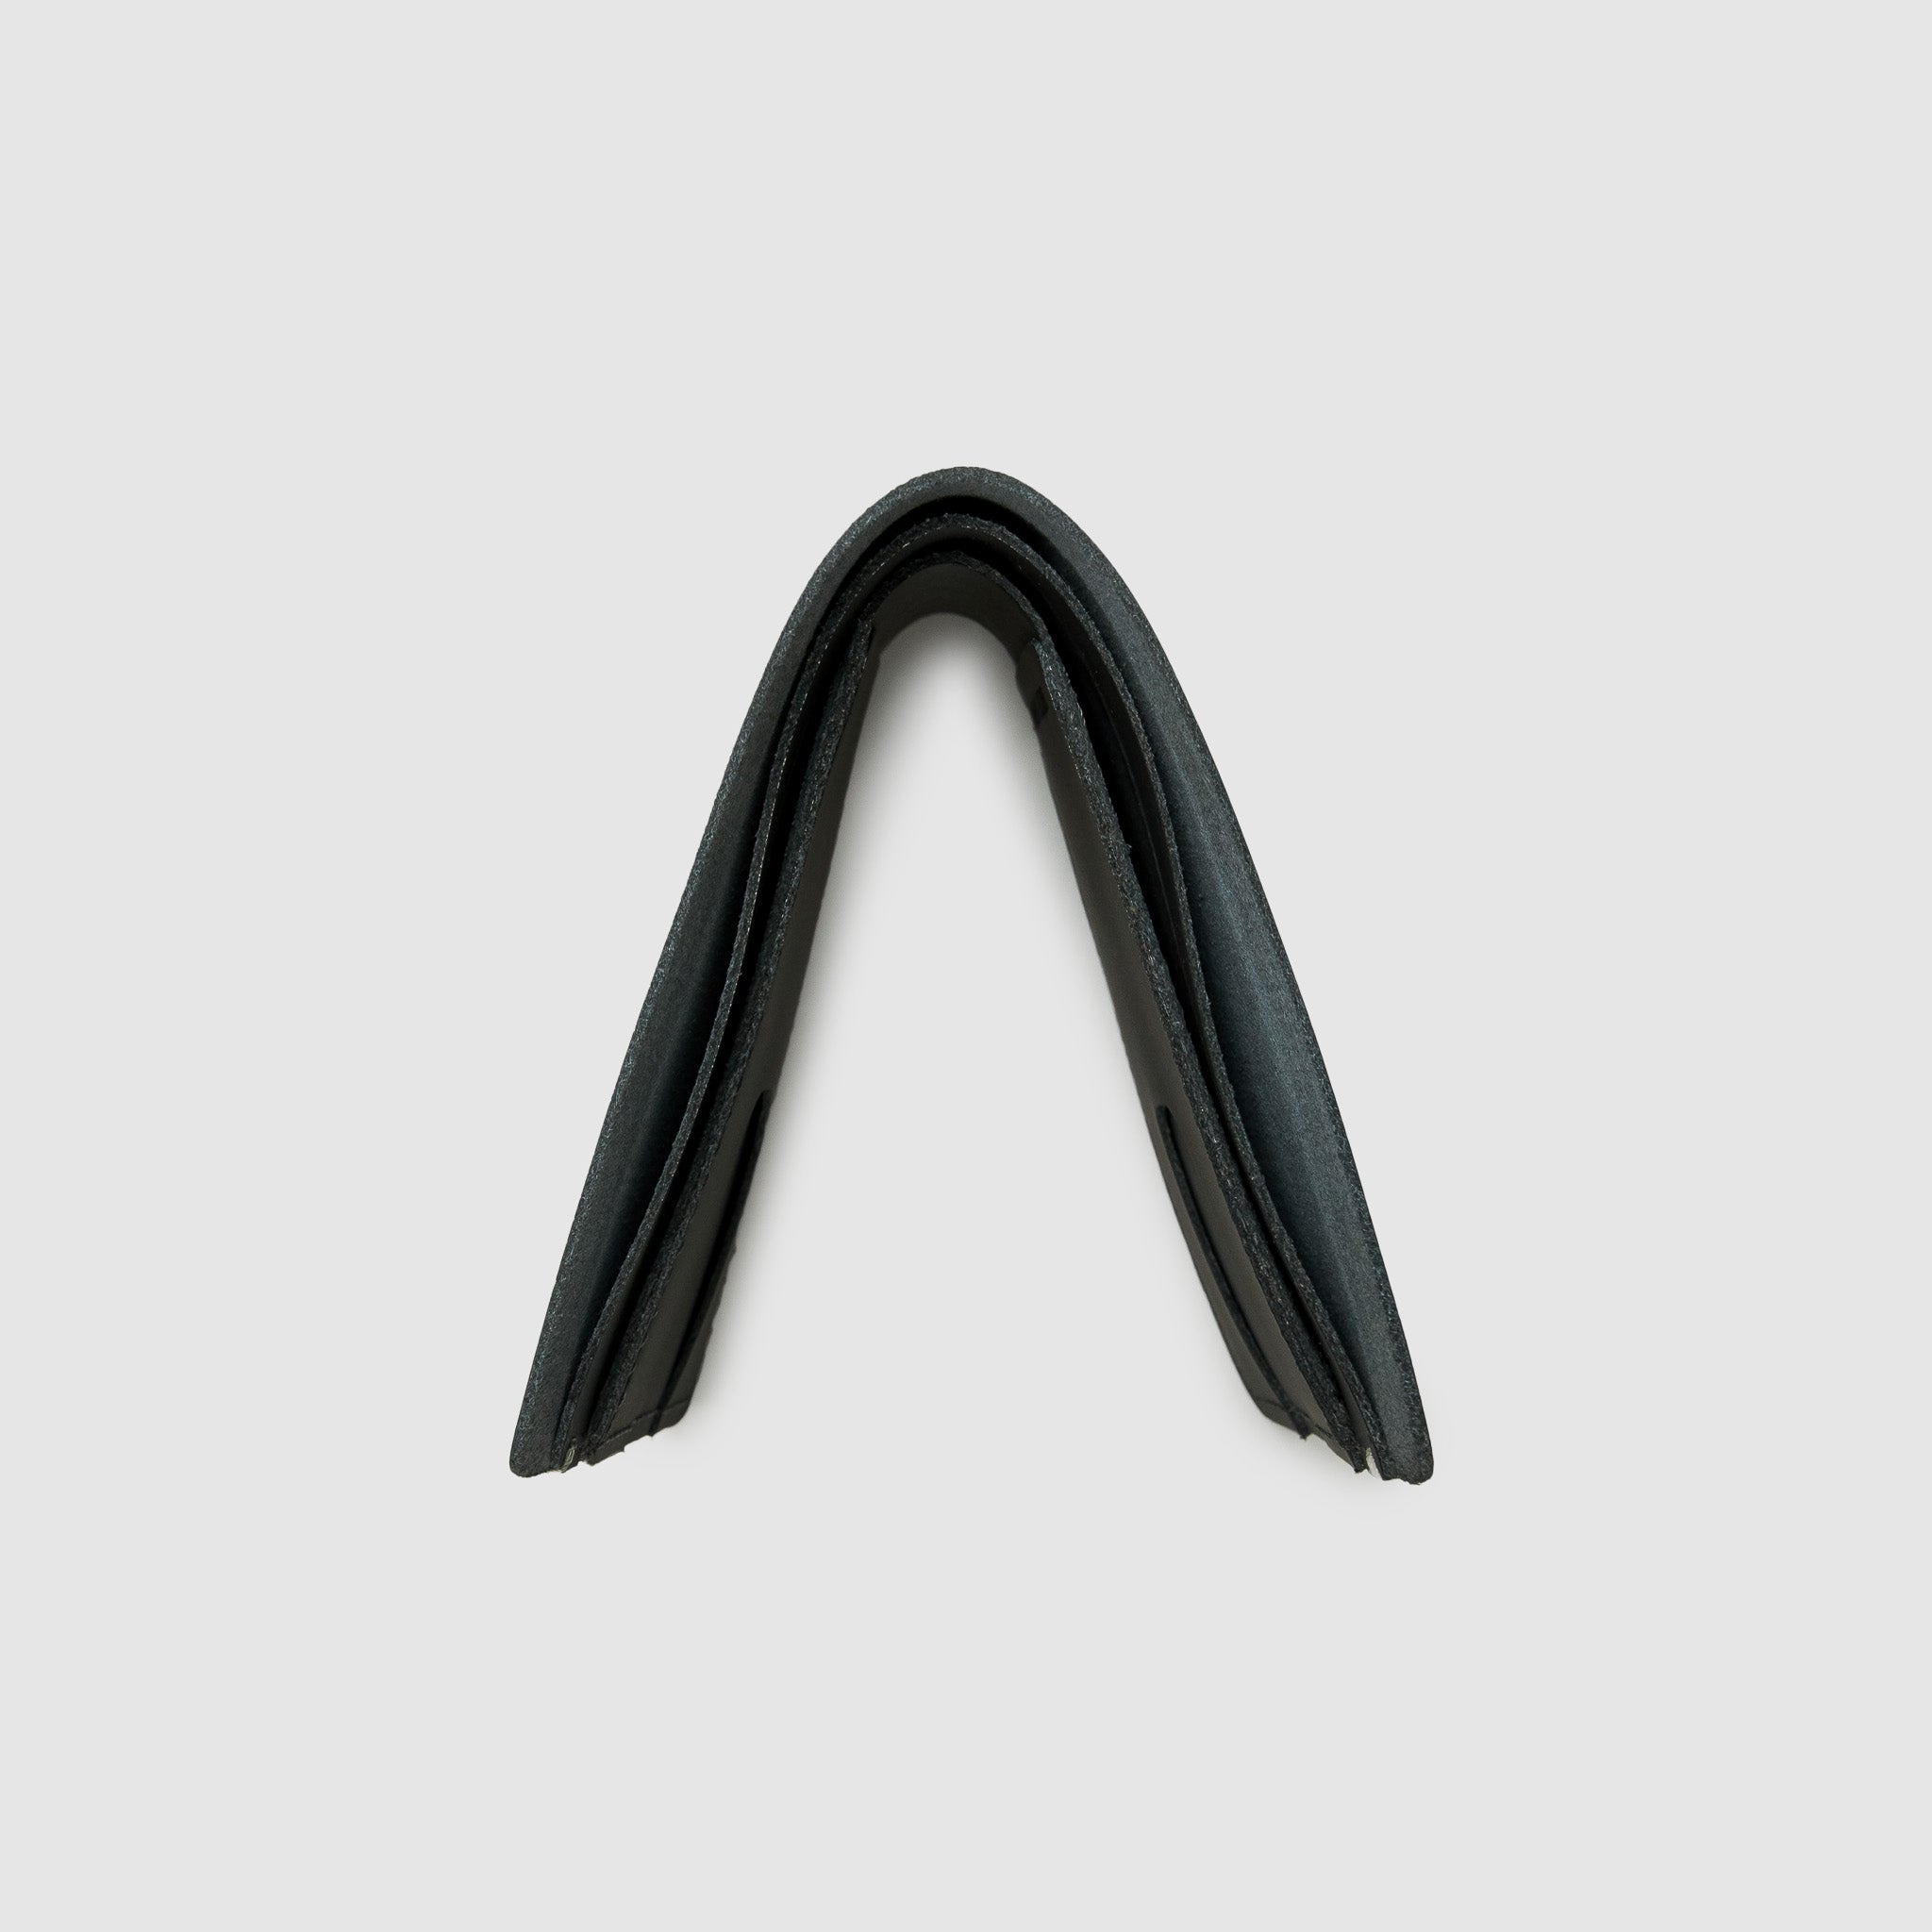 Anson Calder International Billfold Wallet RFID french calfskin leather _black